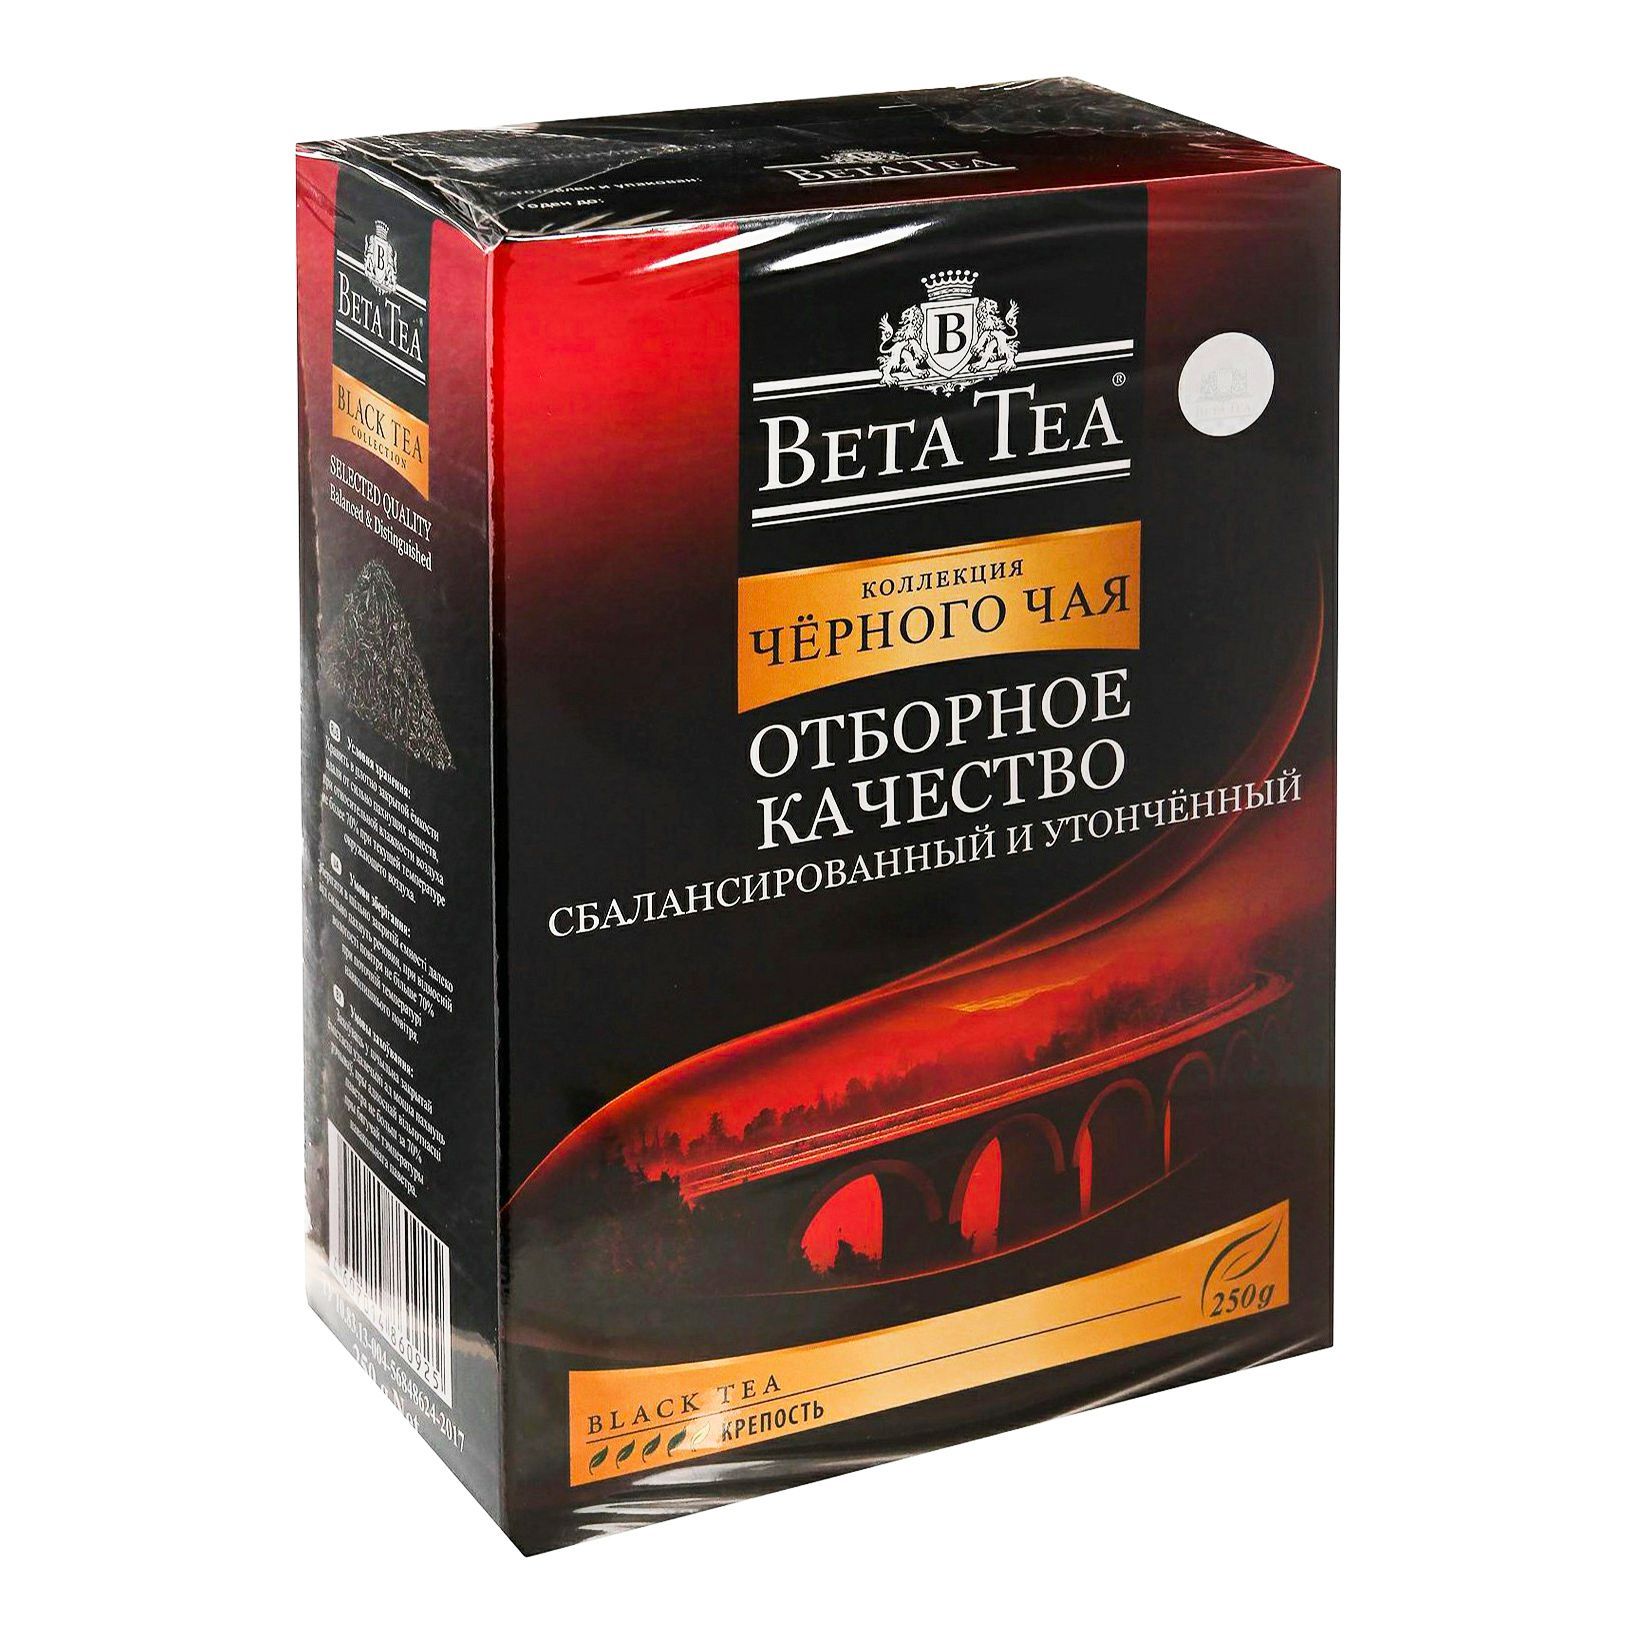 Черный чай opa. Чай Beta Tea Opa черный 250г. Чай бета Теа опа черный 250. Чай Beta Tea опа черный 250 цейлонский байховый.